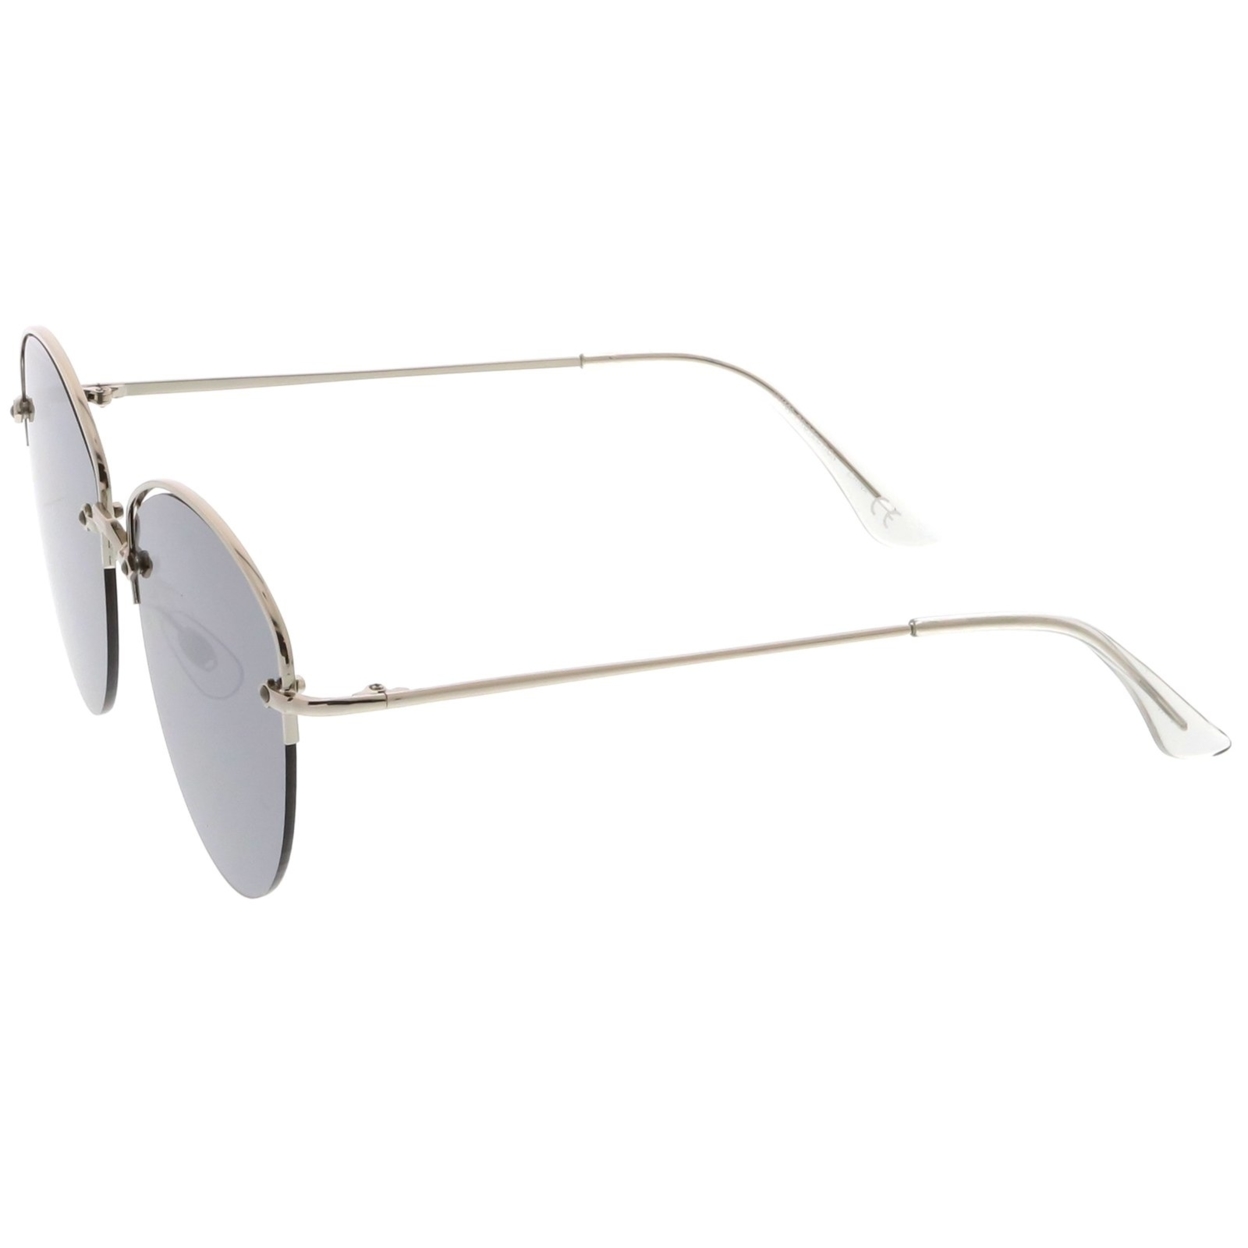 Modern Metal Nose Bridge Mirrored Flat Lens Semi-Rimless Sunglasses 60mm - Gold / Silver Mirror